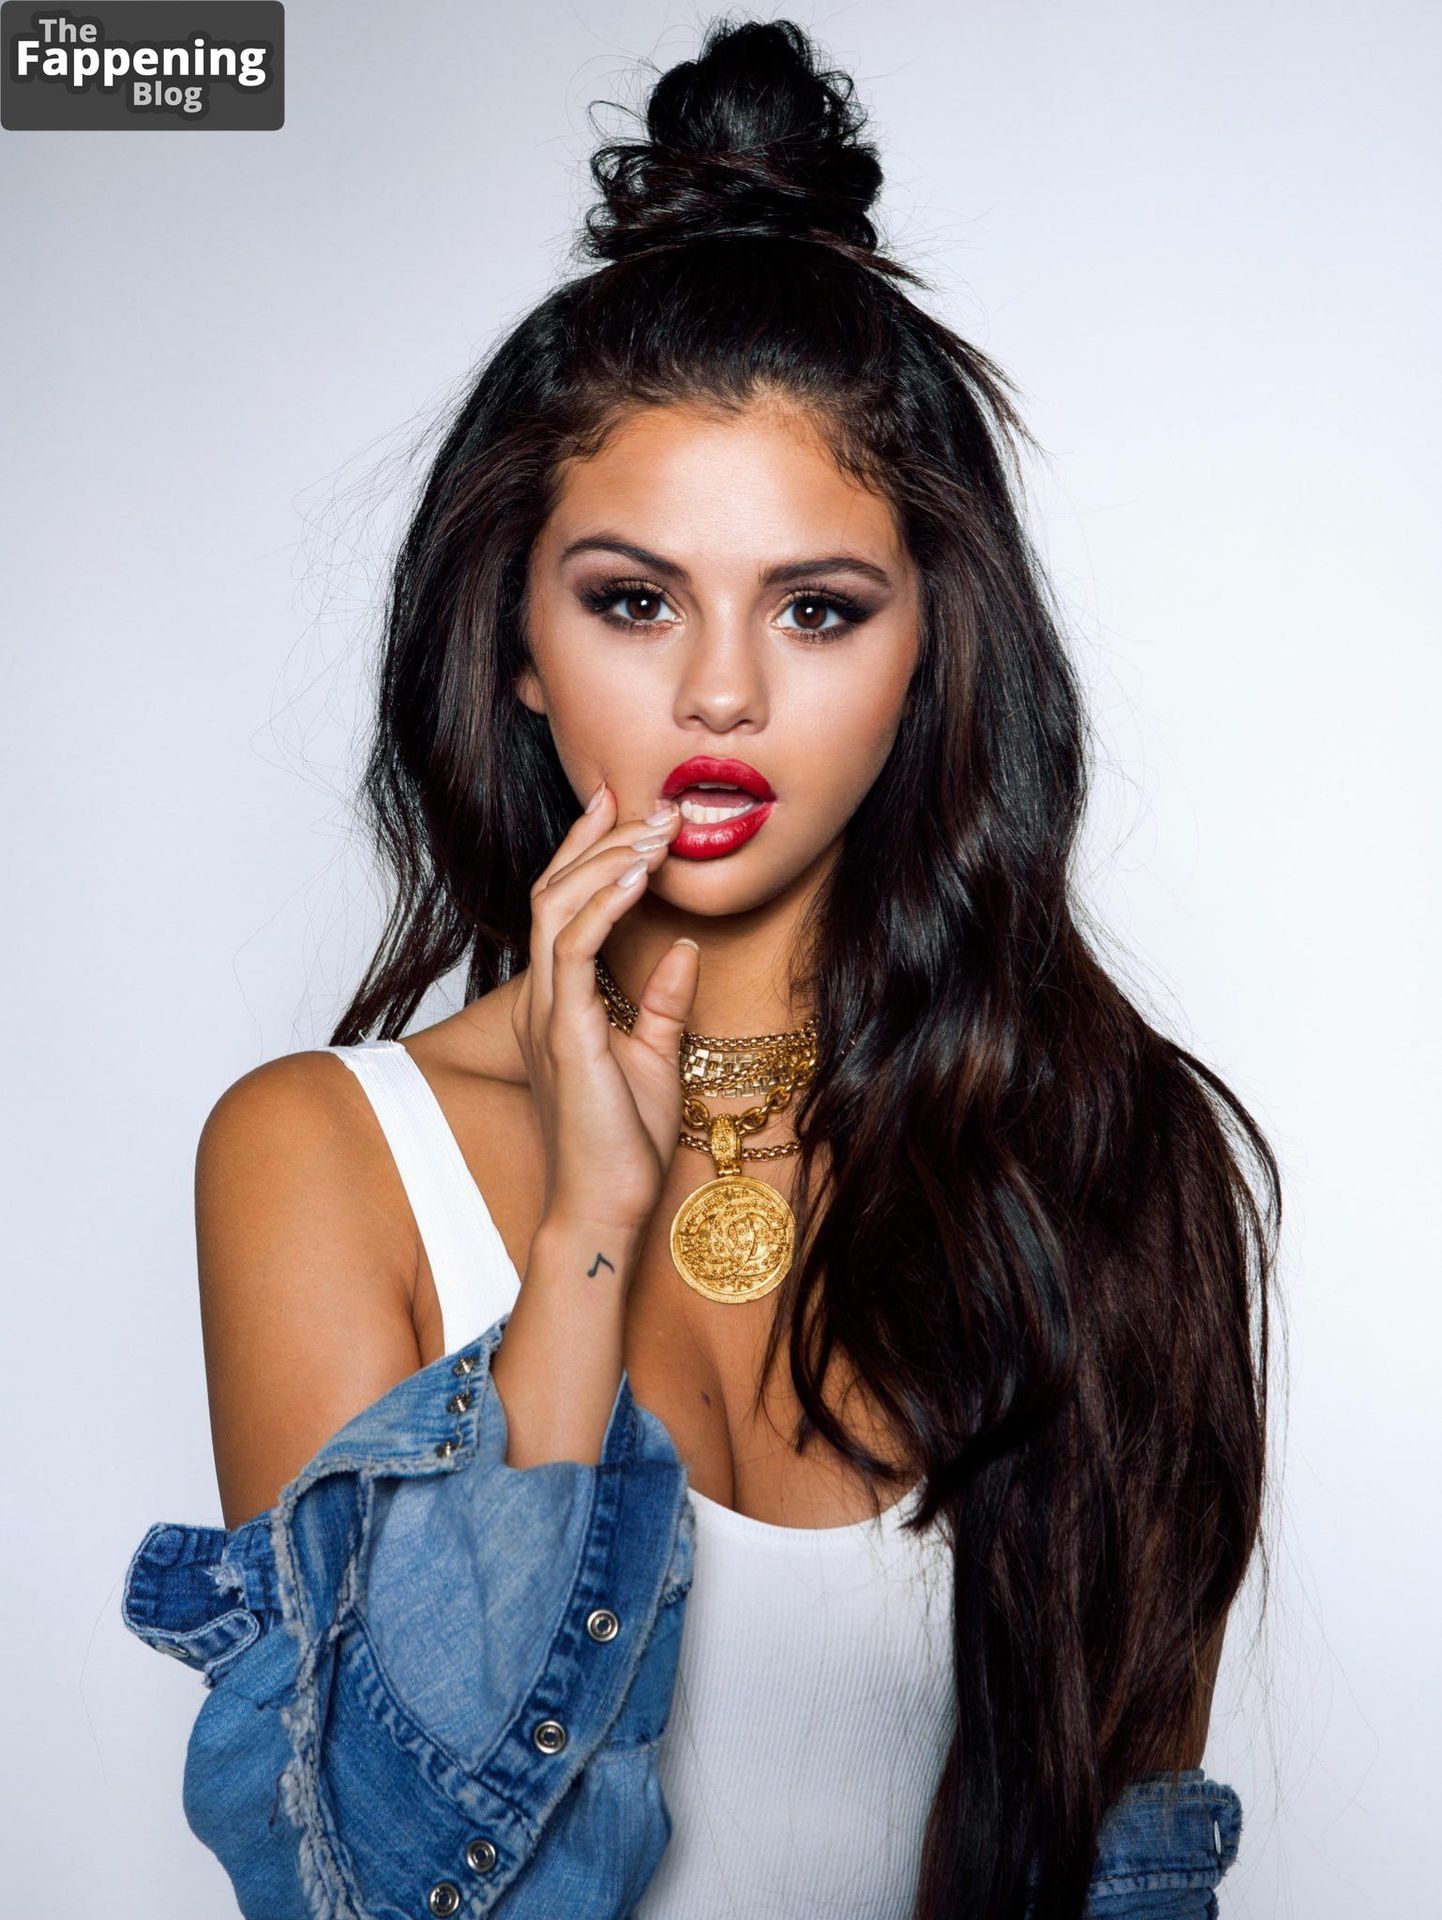 Selena Gomez Hot (14 Photos)